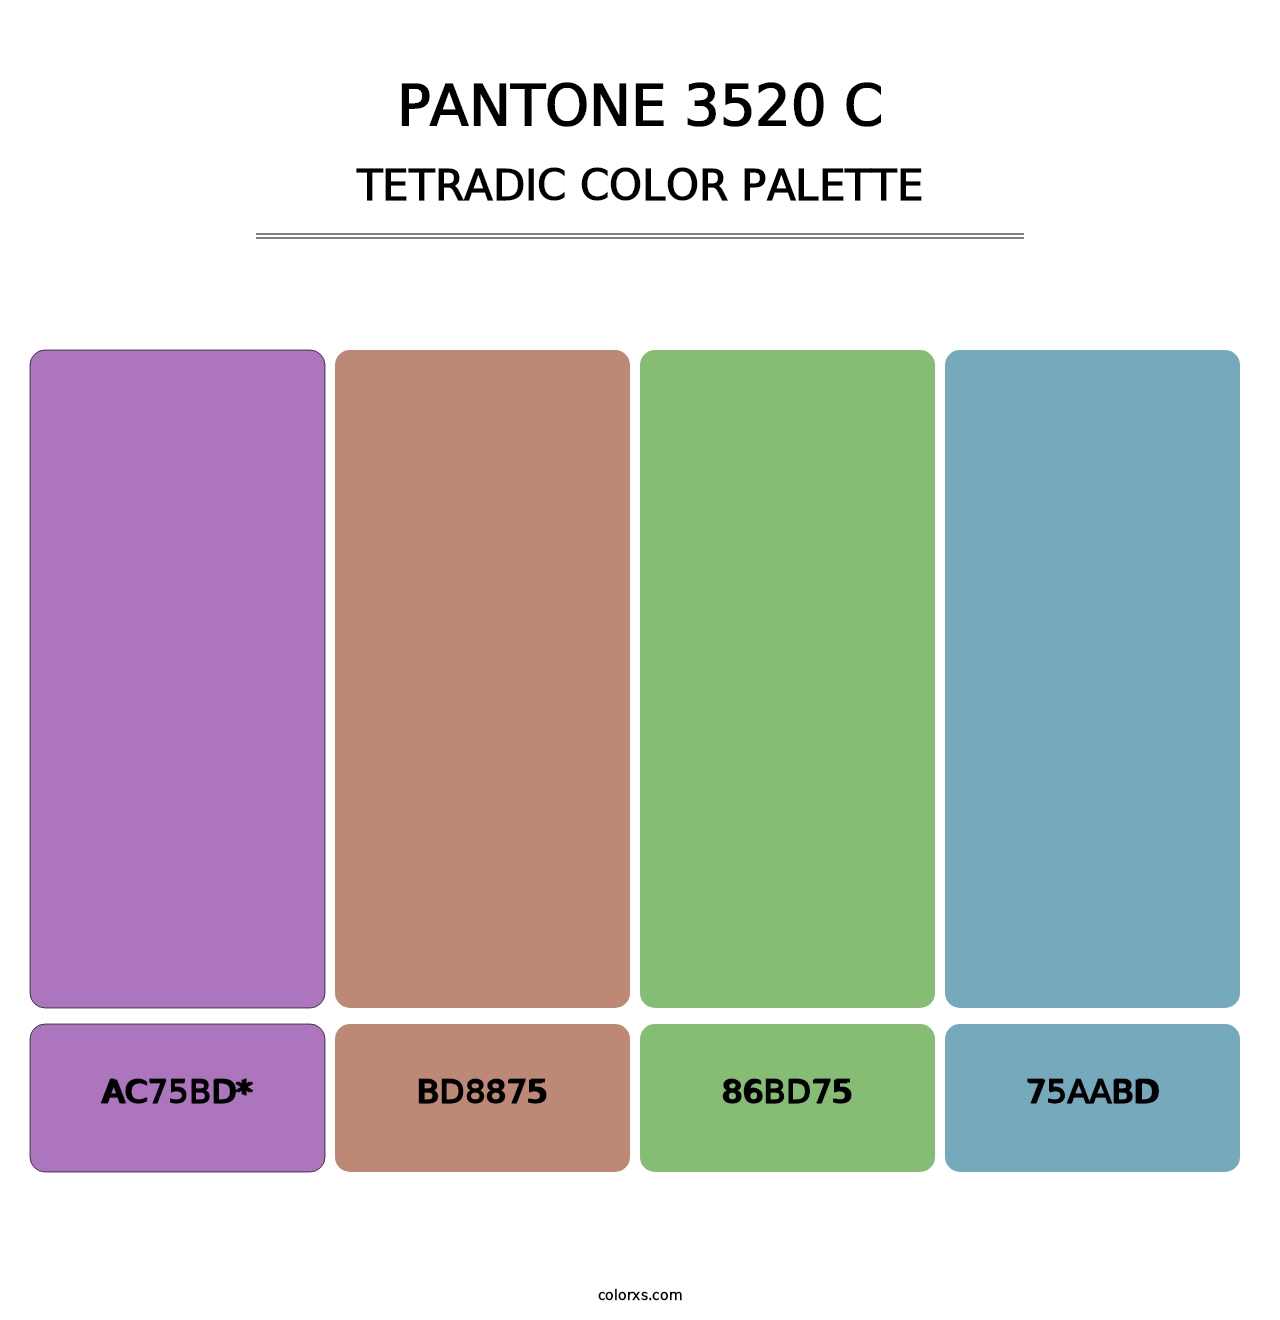 PANTONE 3520 C - Tetradic Color Palette